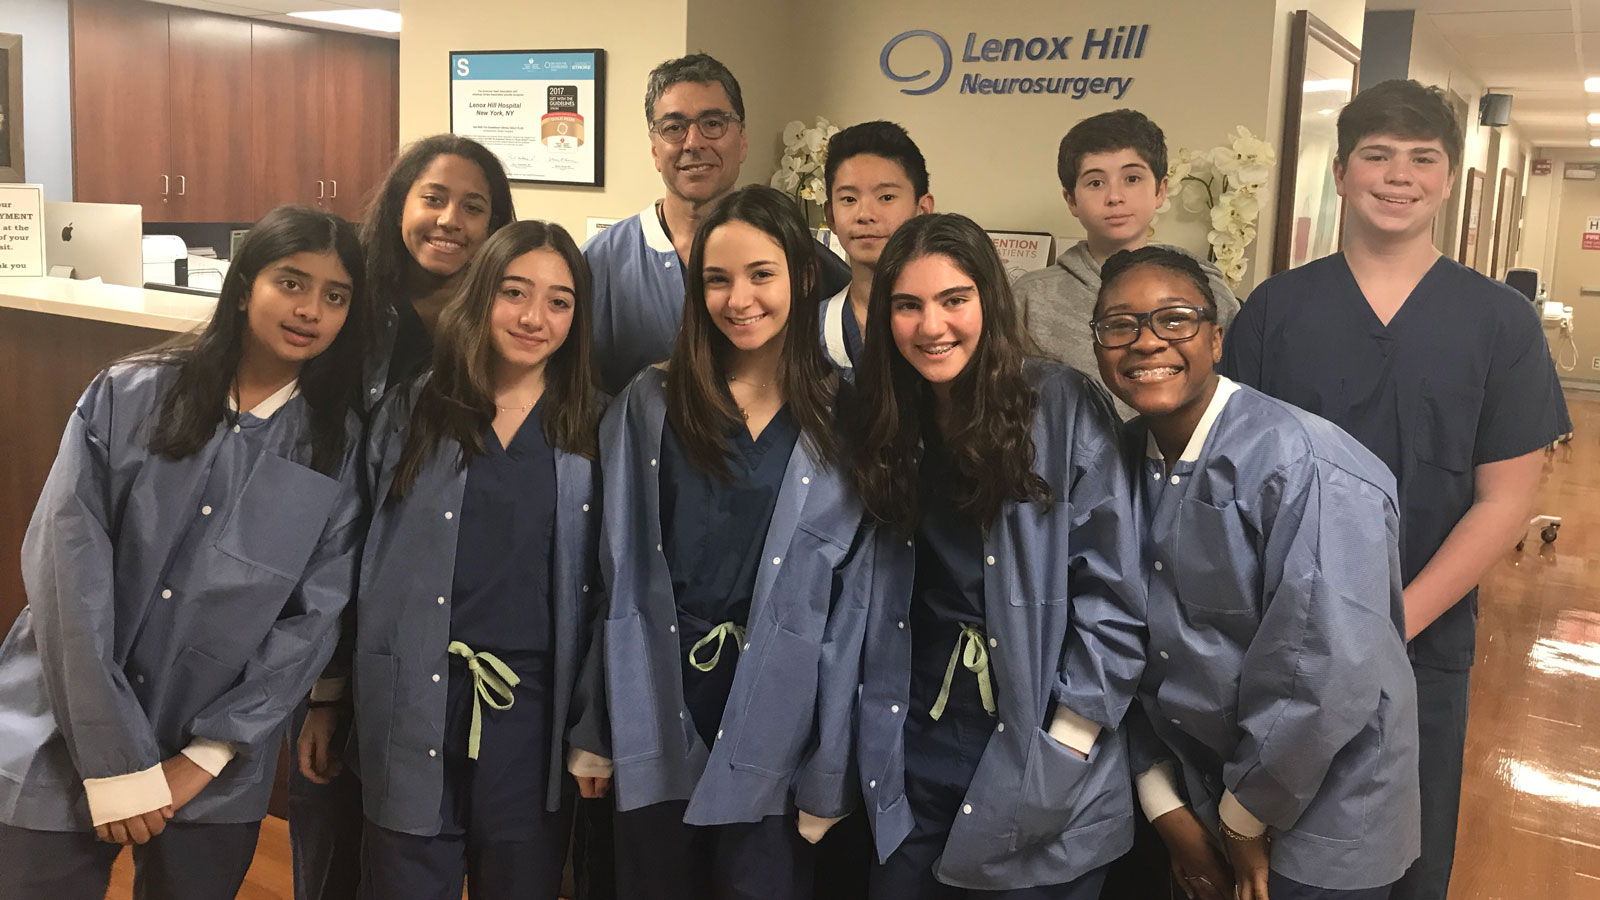 Students at the Lenox Hill Neurosurgery Department